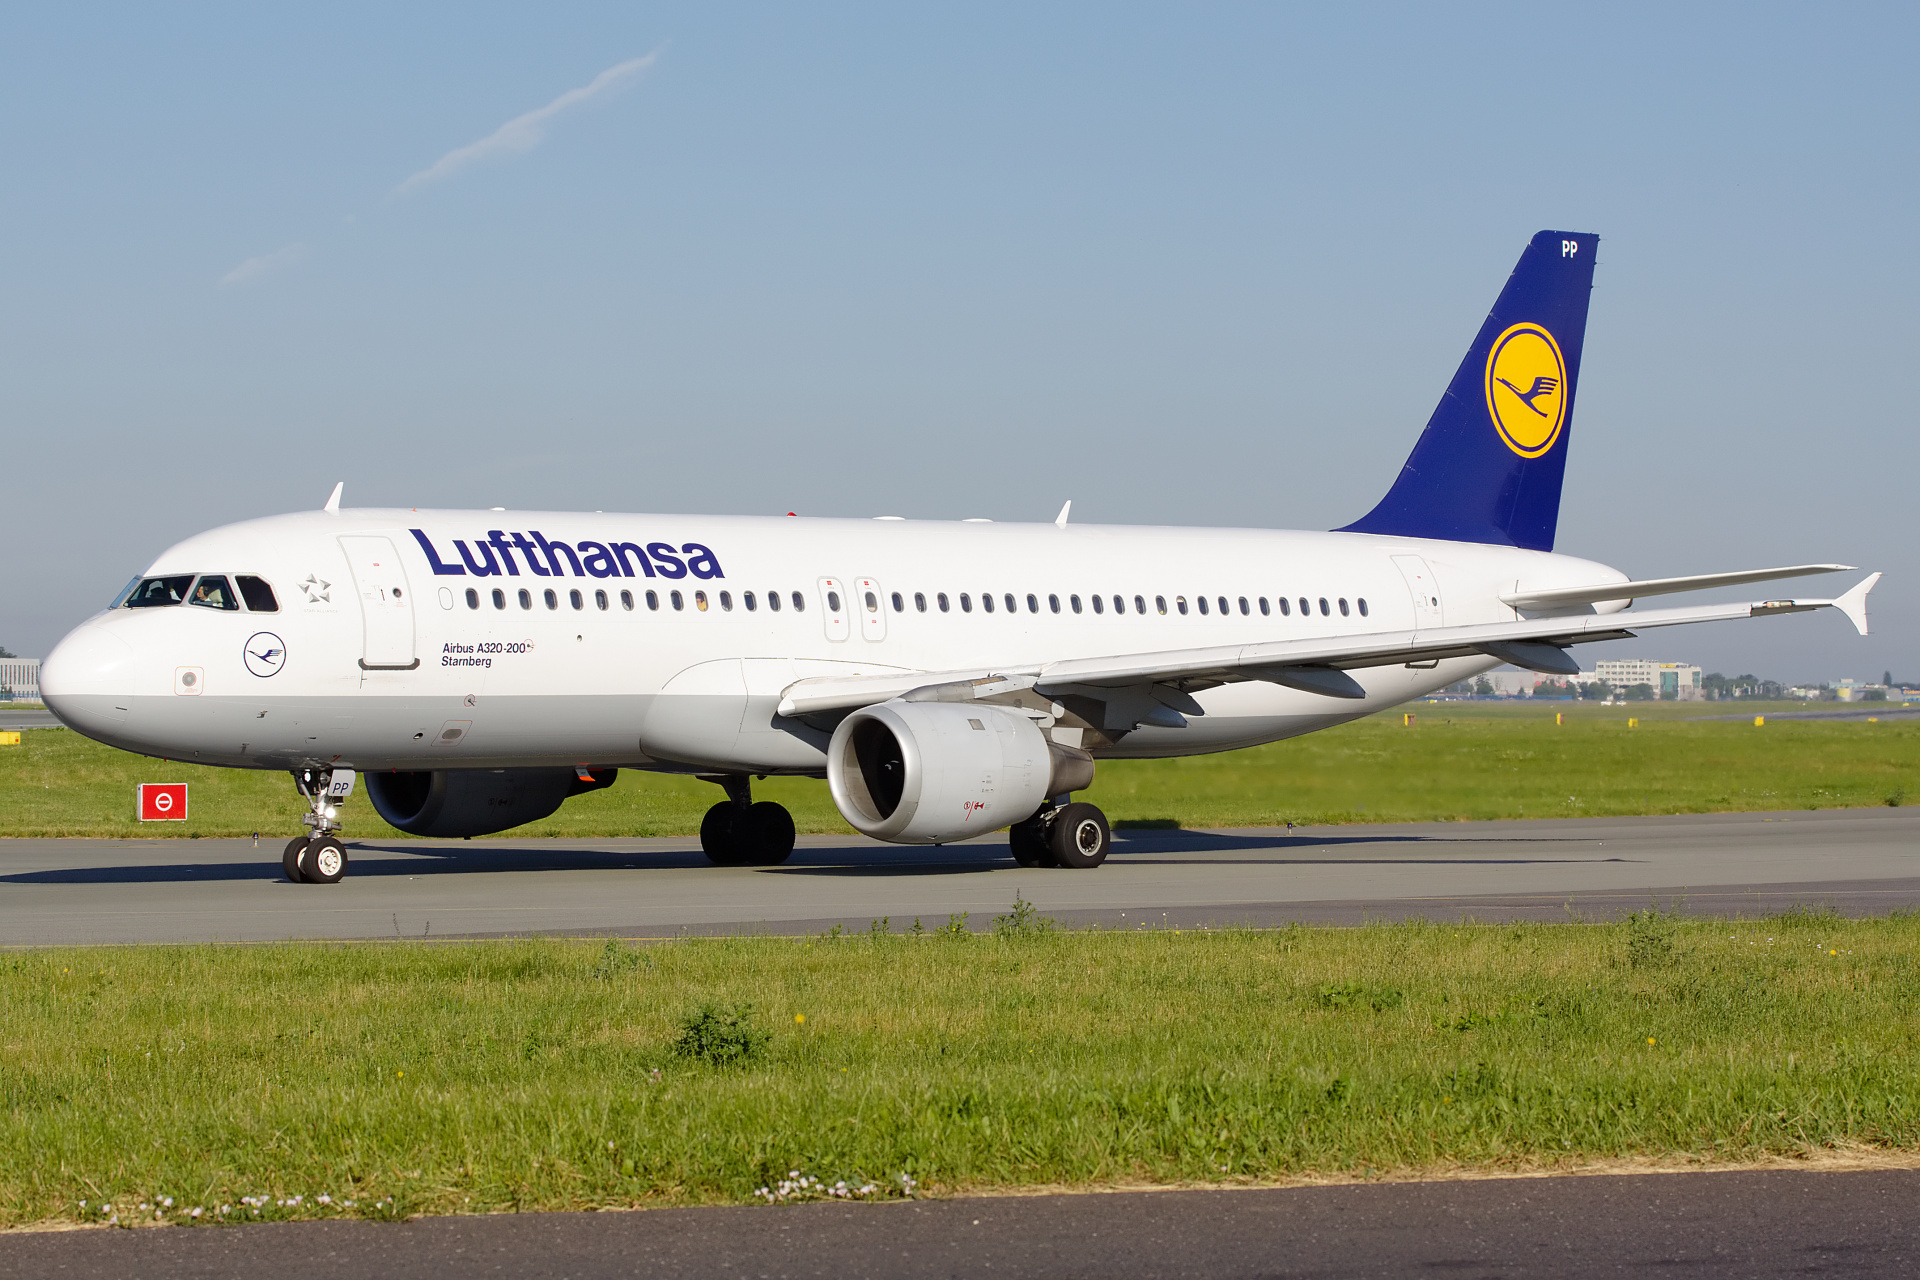 D-AIPP (Aircraft » EPWA Spotting » Airbus A320-200 » Lufthansa)